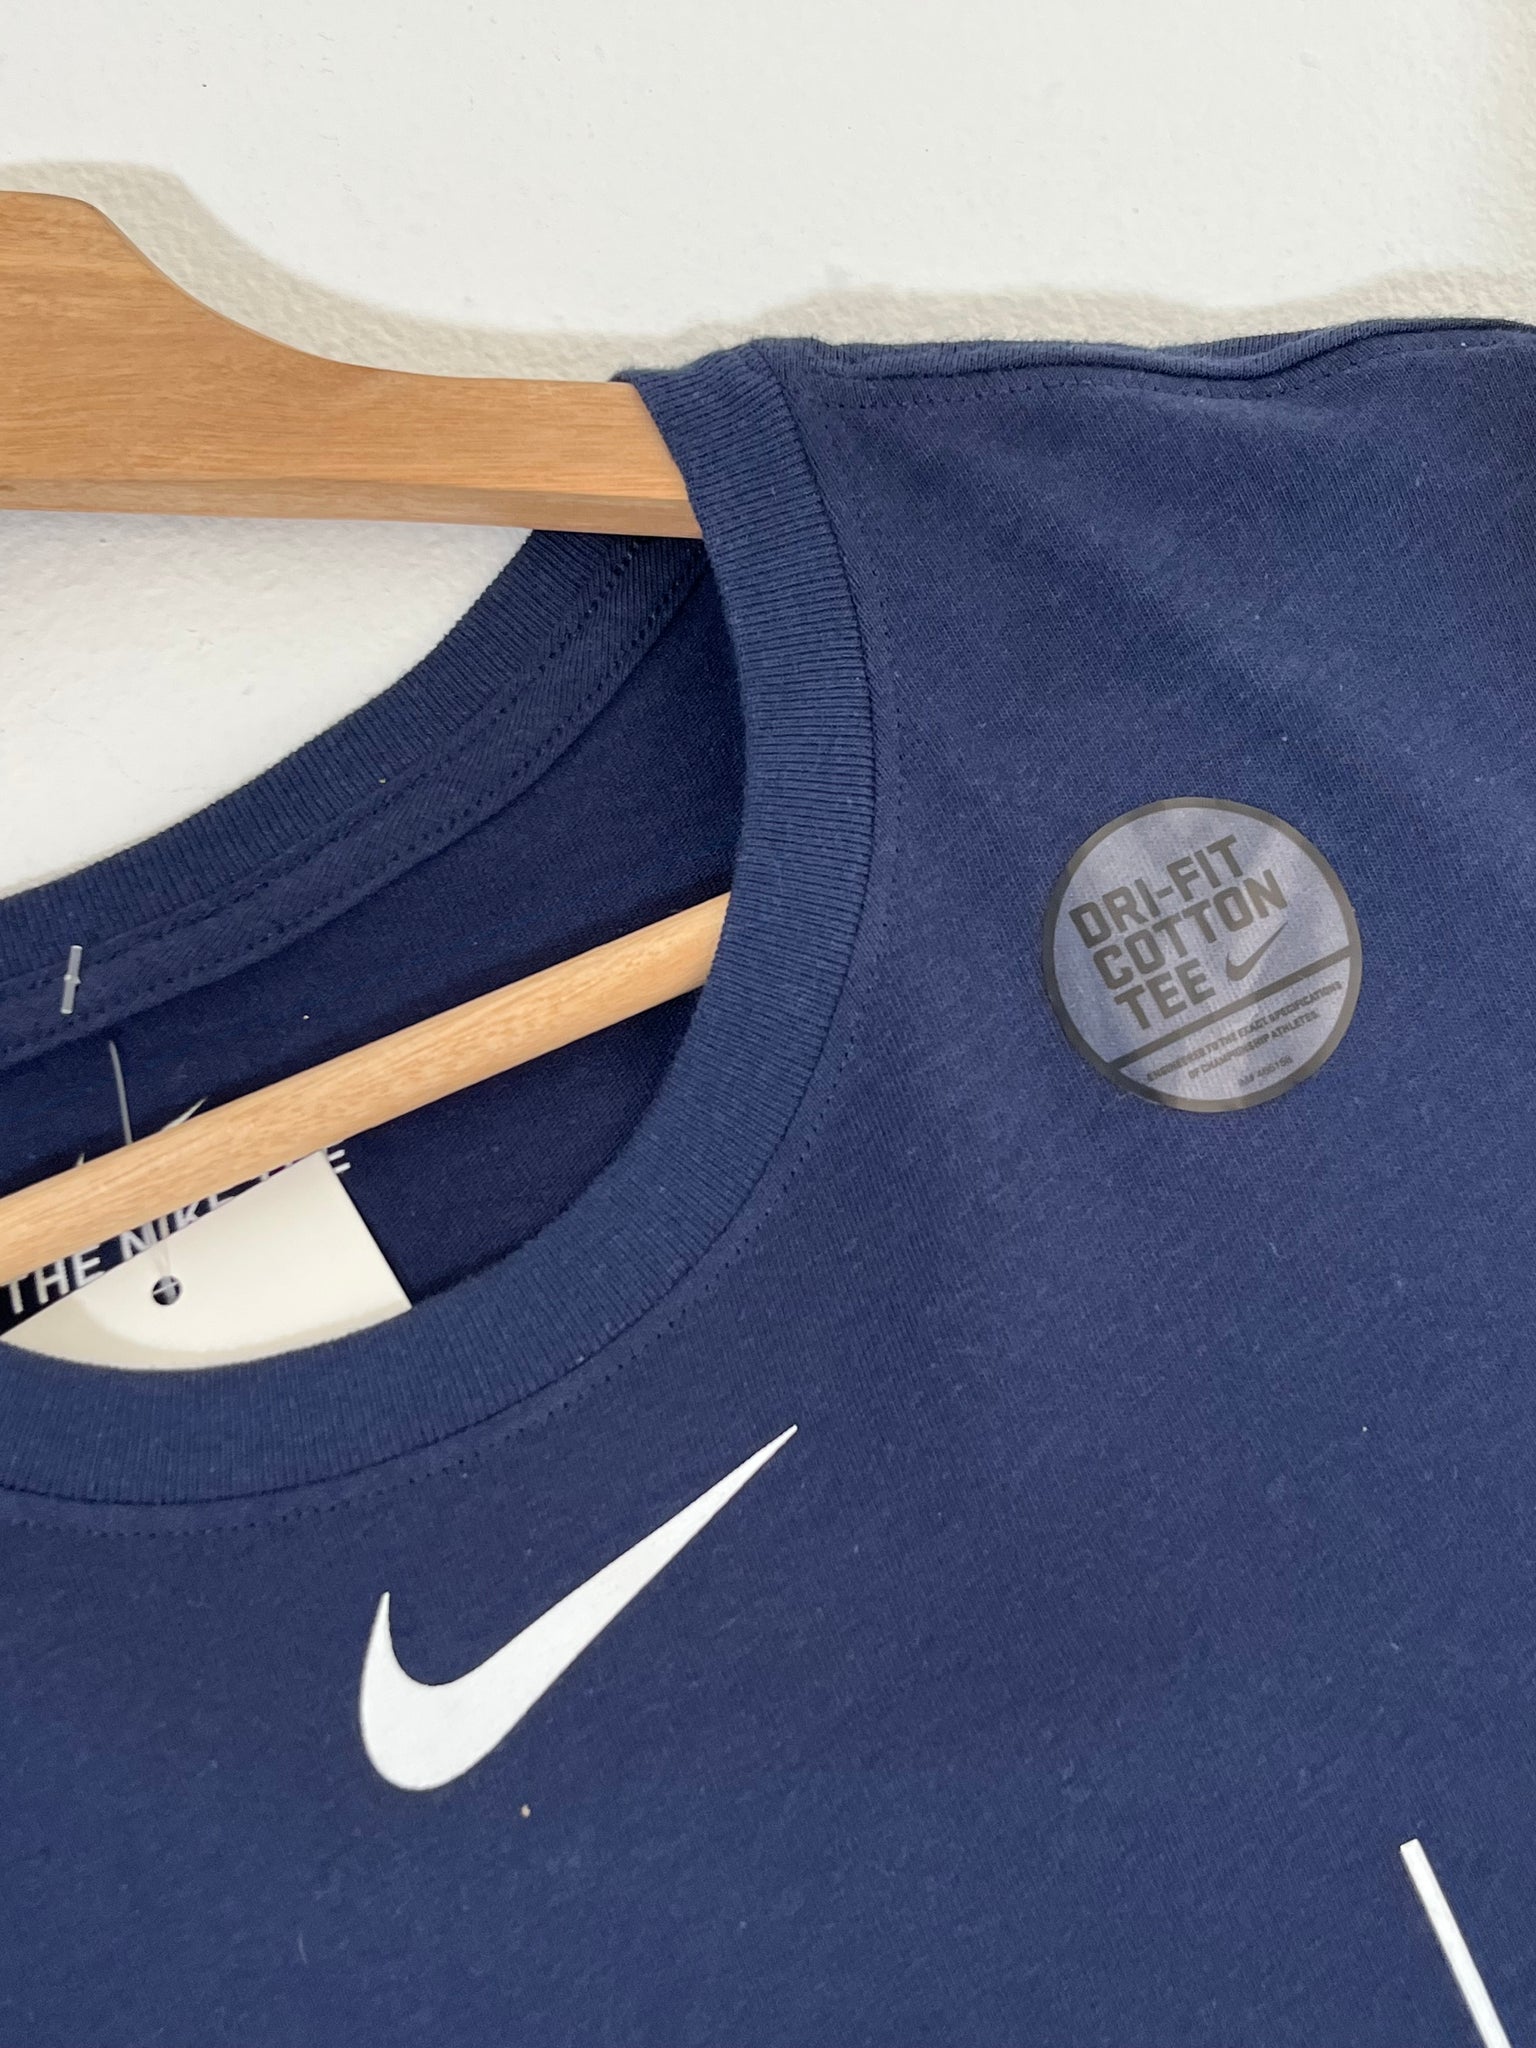 Seattle Mariners Star Logo Vintage Scrum T-Shirt – Simply Seattle